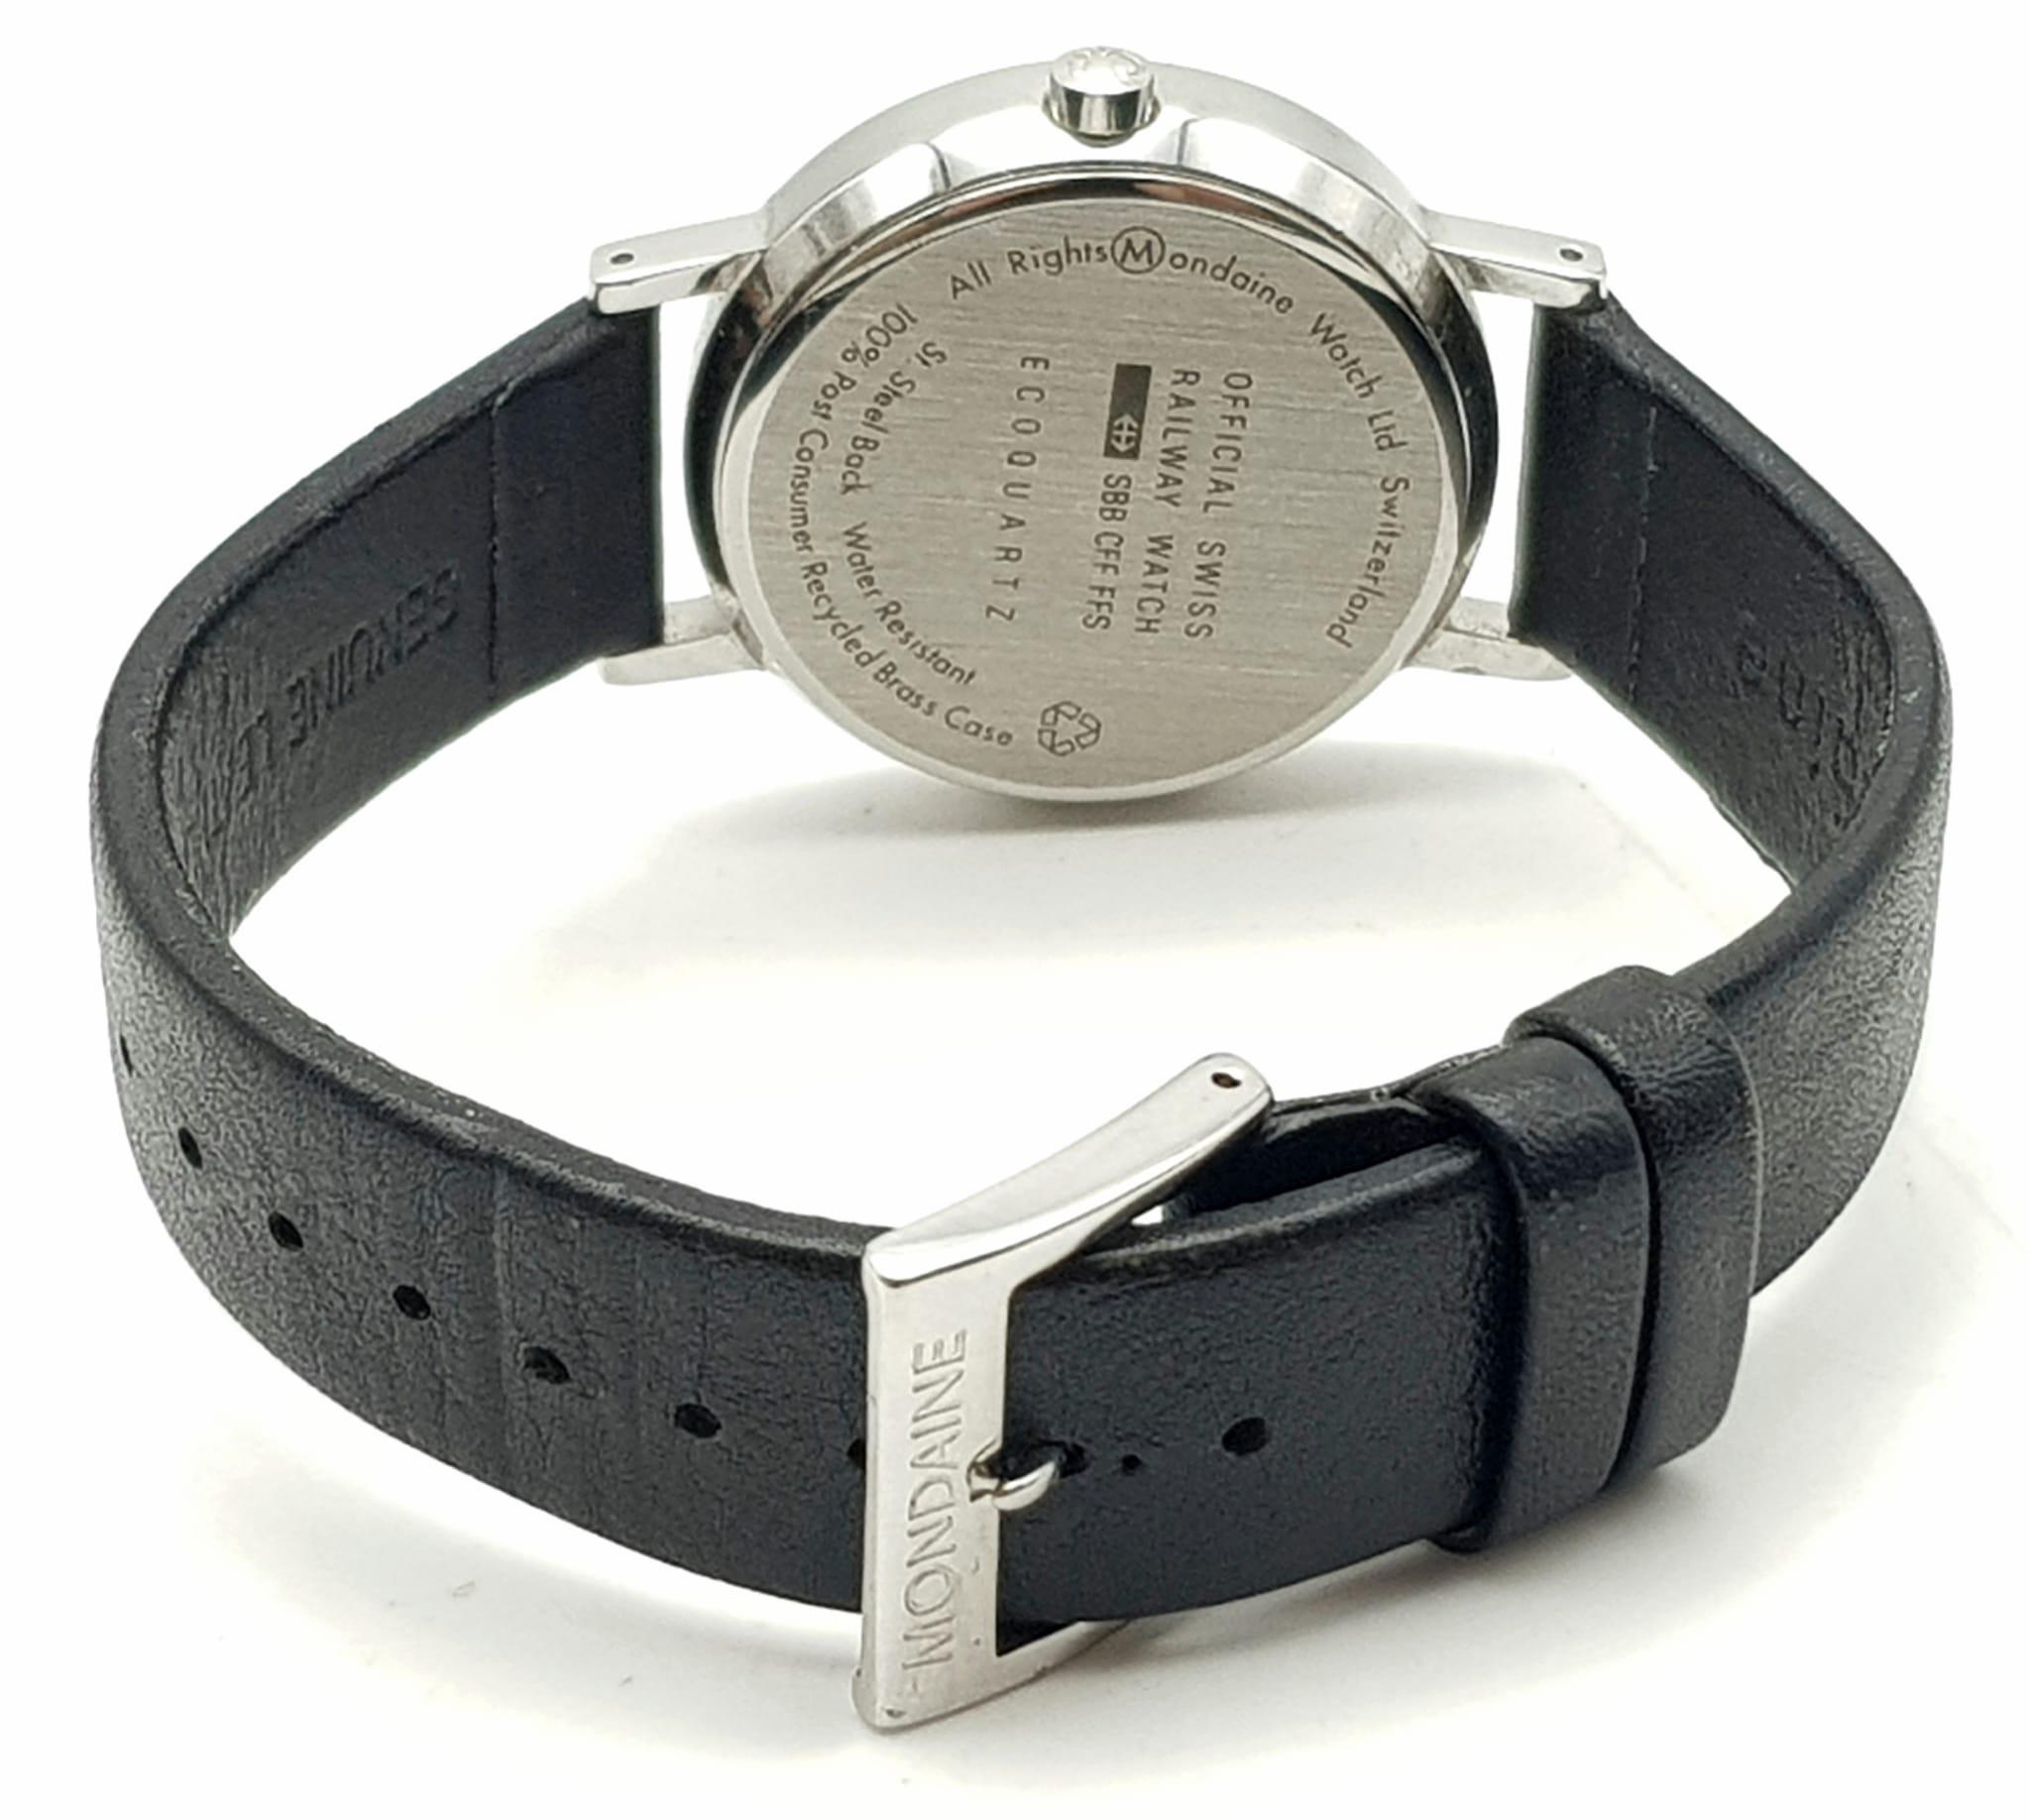 A Vintage Mondaine Railway Watch. Black leather strap. Stainless steel case - 32mm. Quartz movement. - Image 5 of 6